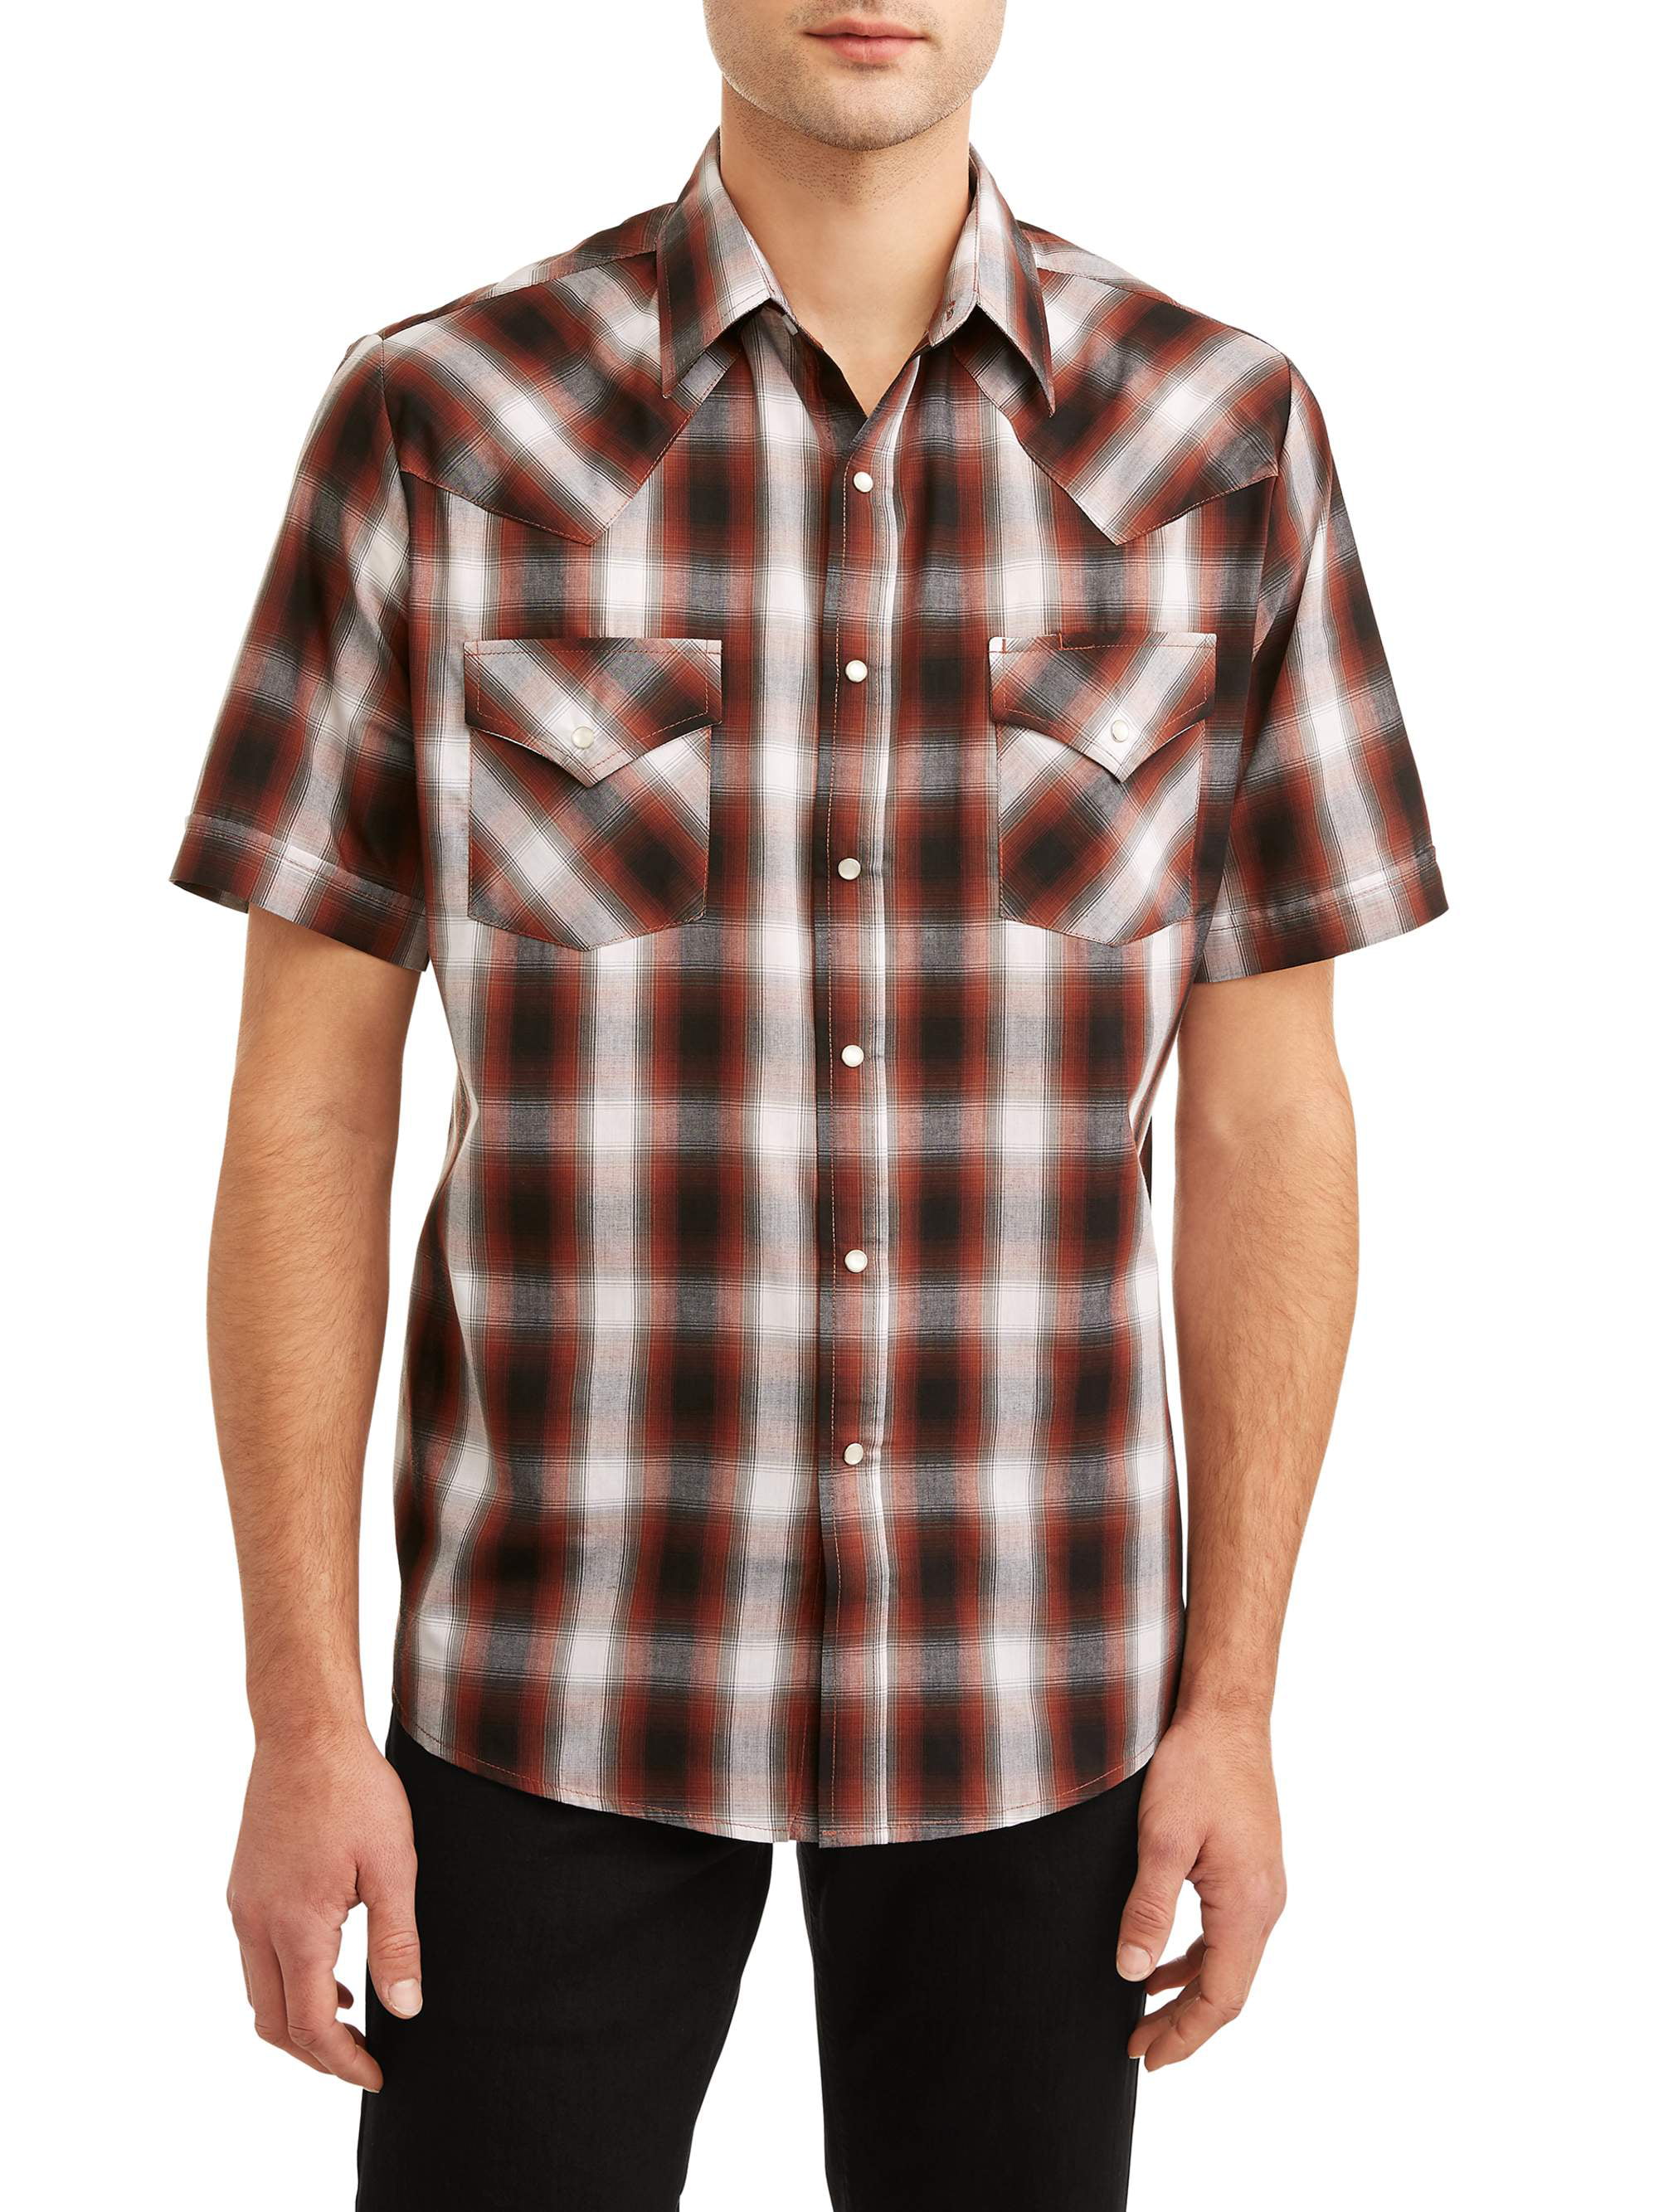 Plains Men's Short Sleeve Plaid Western Shirt, up to Size 6XL - Walmart.com